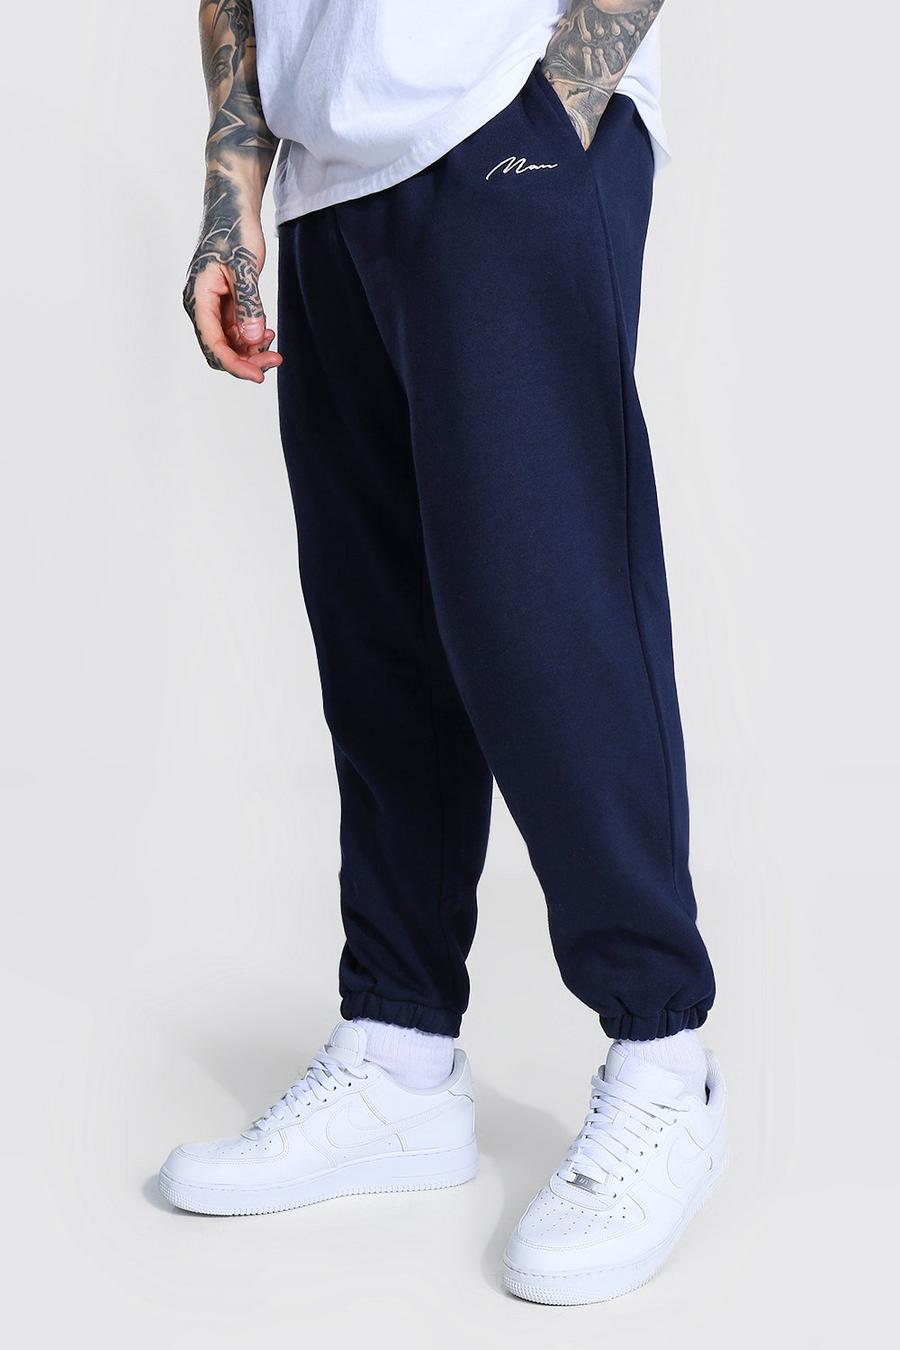 Pantaloni tuta taglio comodo con scritta Man, Navy image number 1